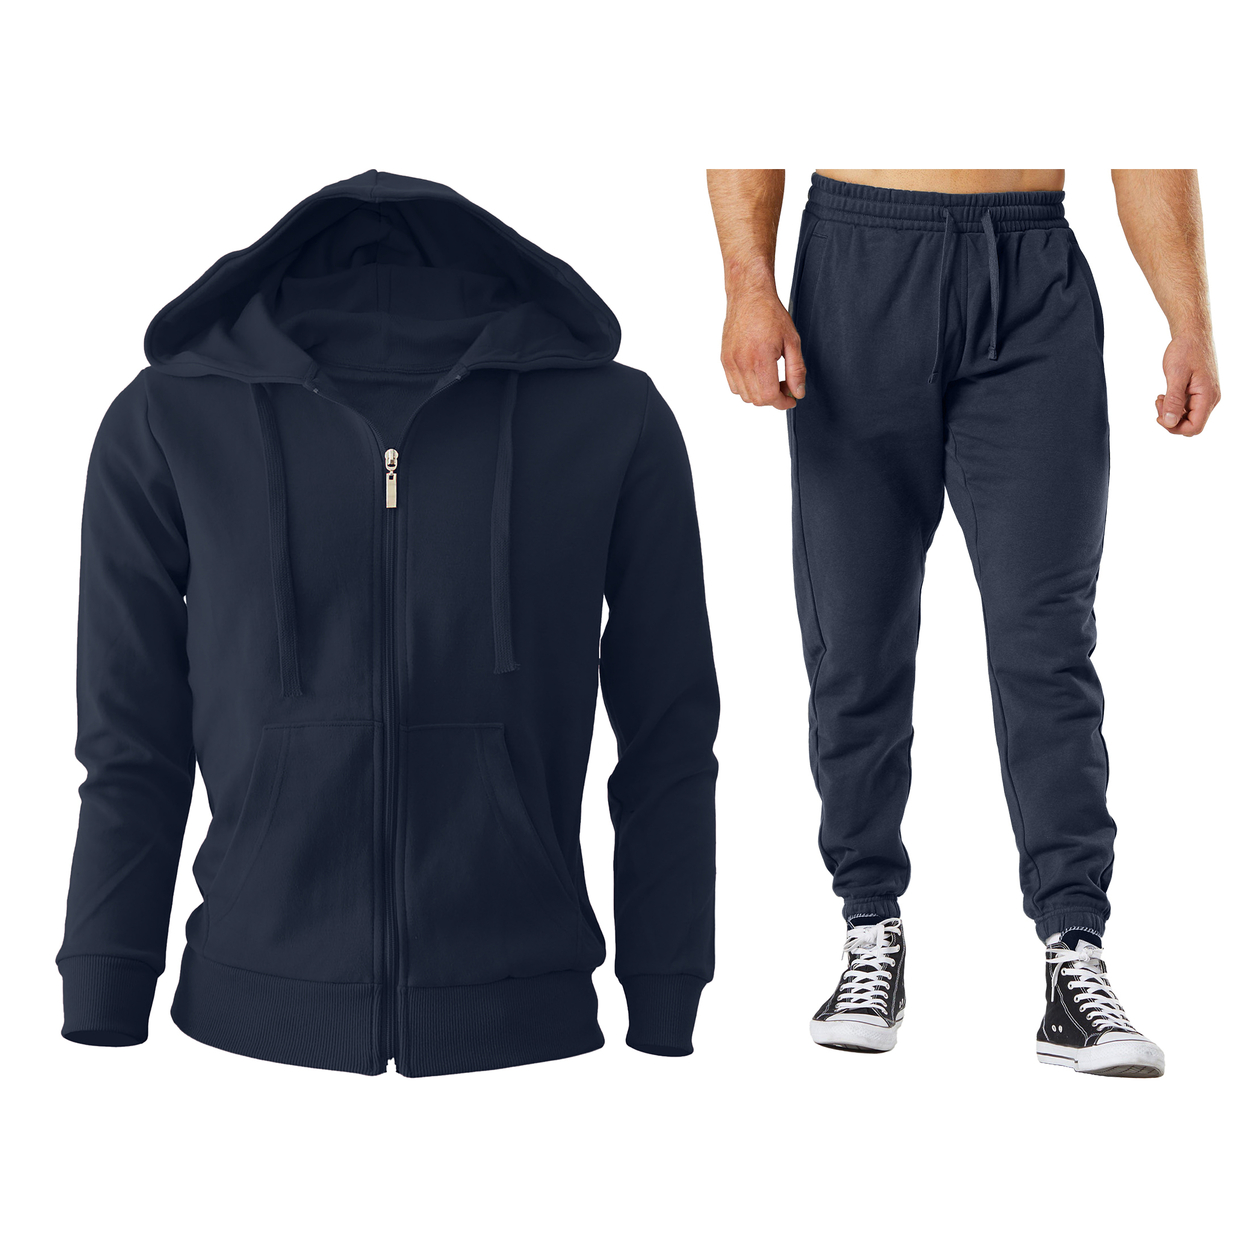 2/4-Piece: Men's Winter Warm Cozy Athletic Multi-Pockets BIG & TALL Sweatsuit Set - Charcoal, 1, Small